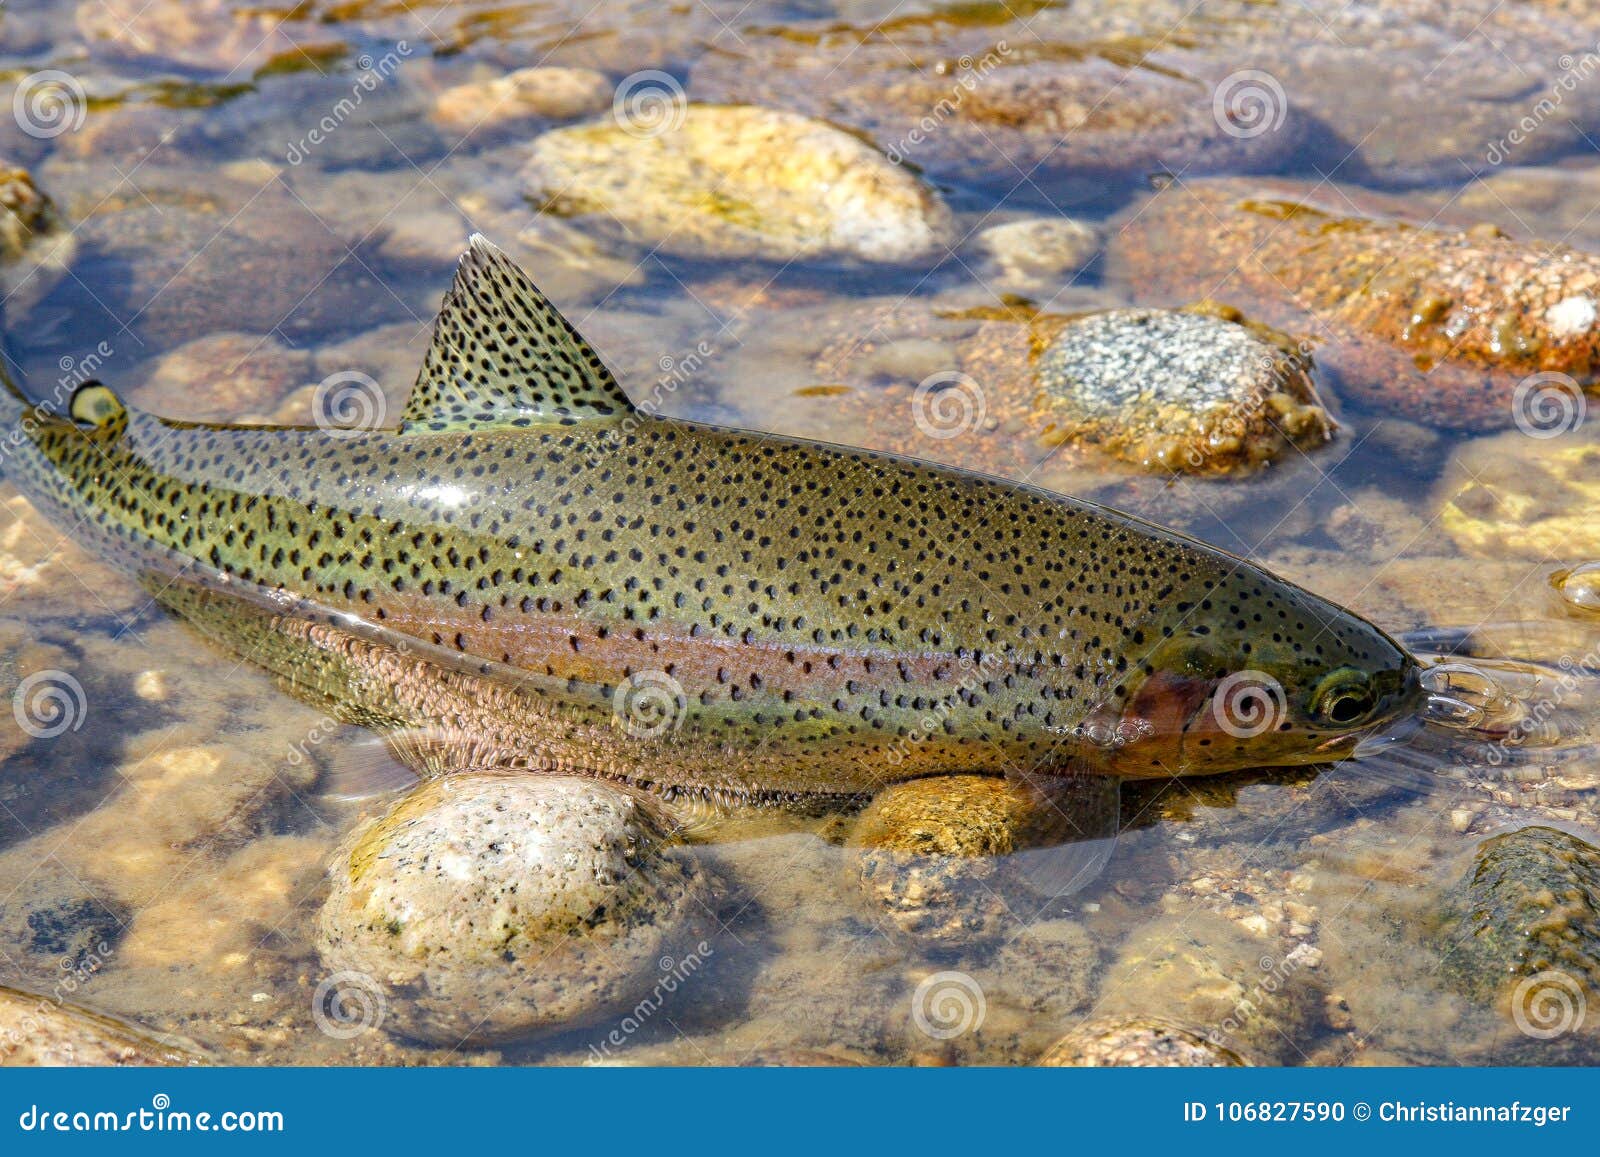 wild rainbow trout in idaho